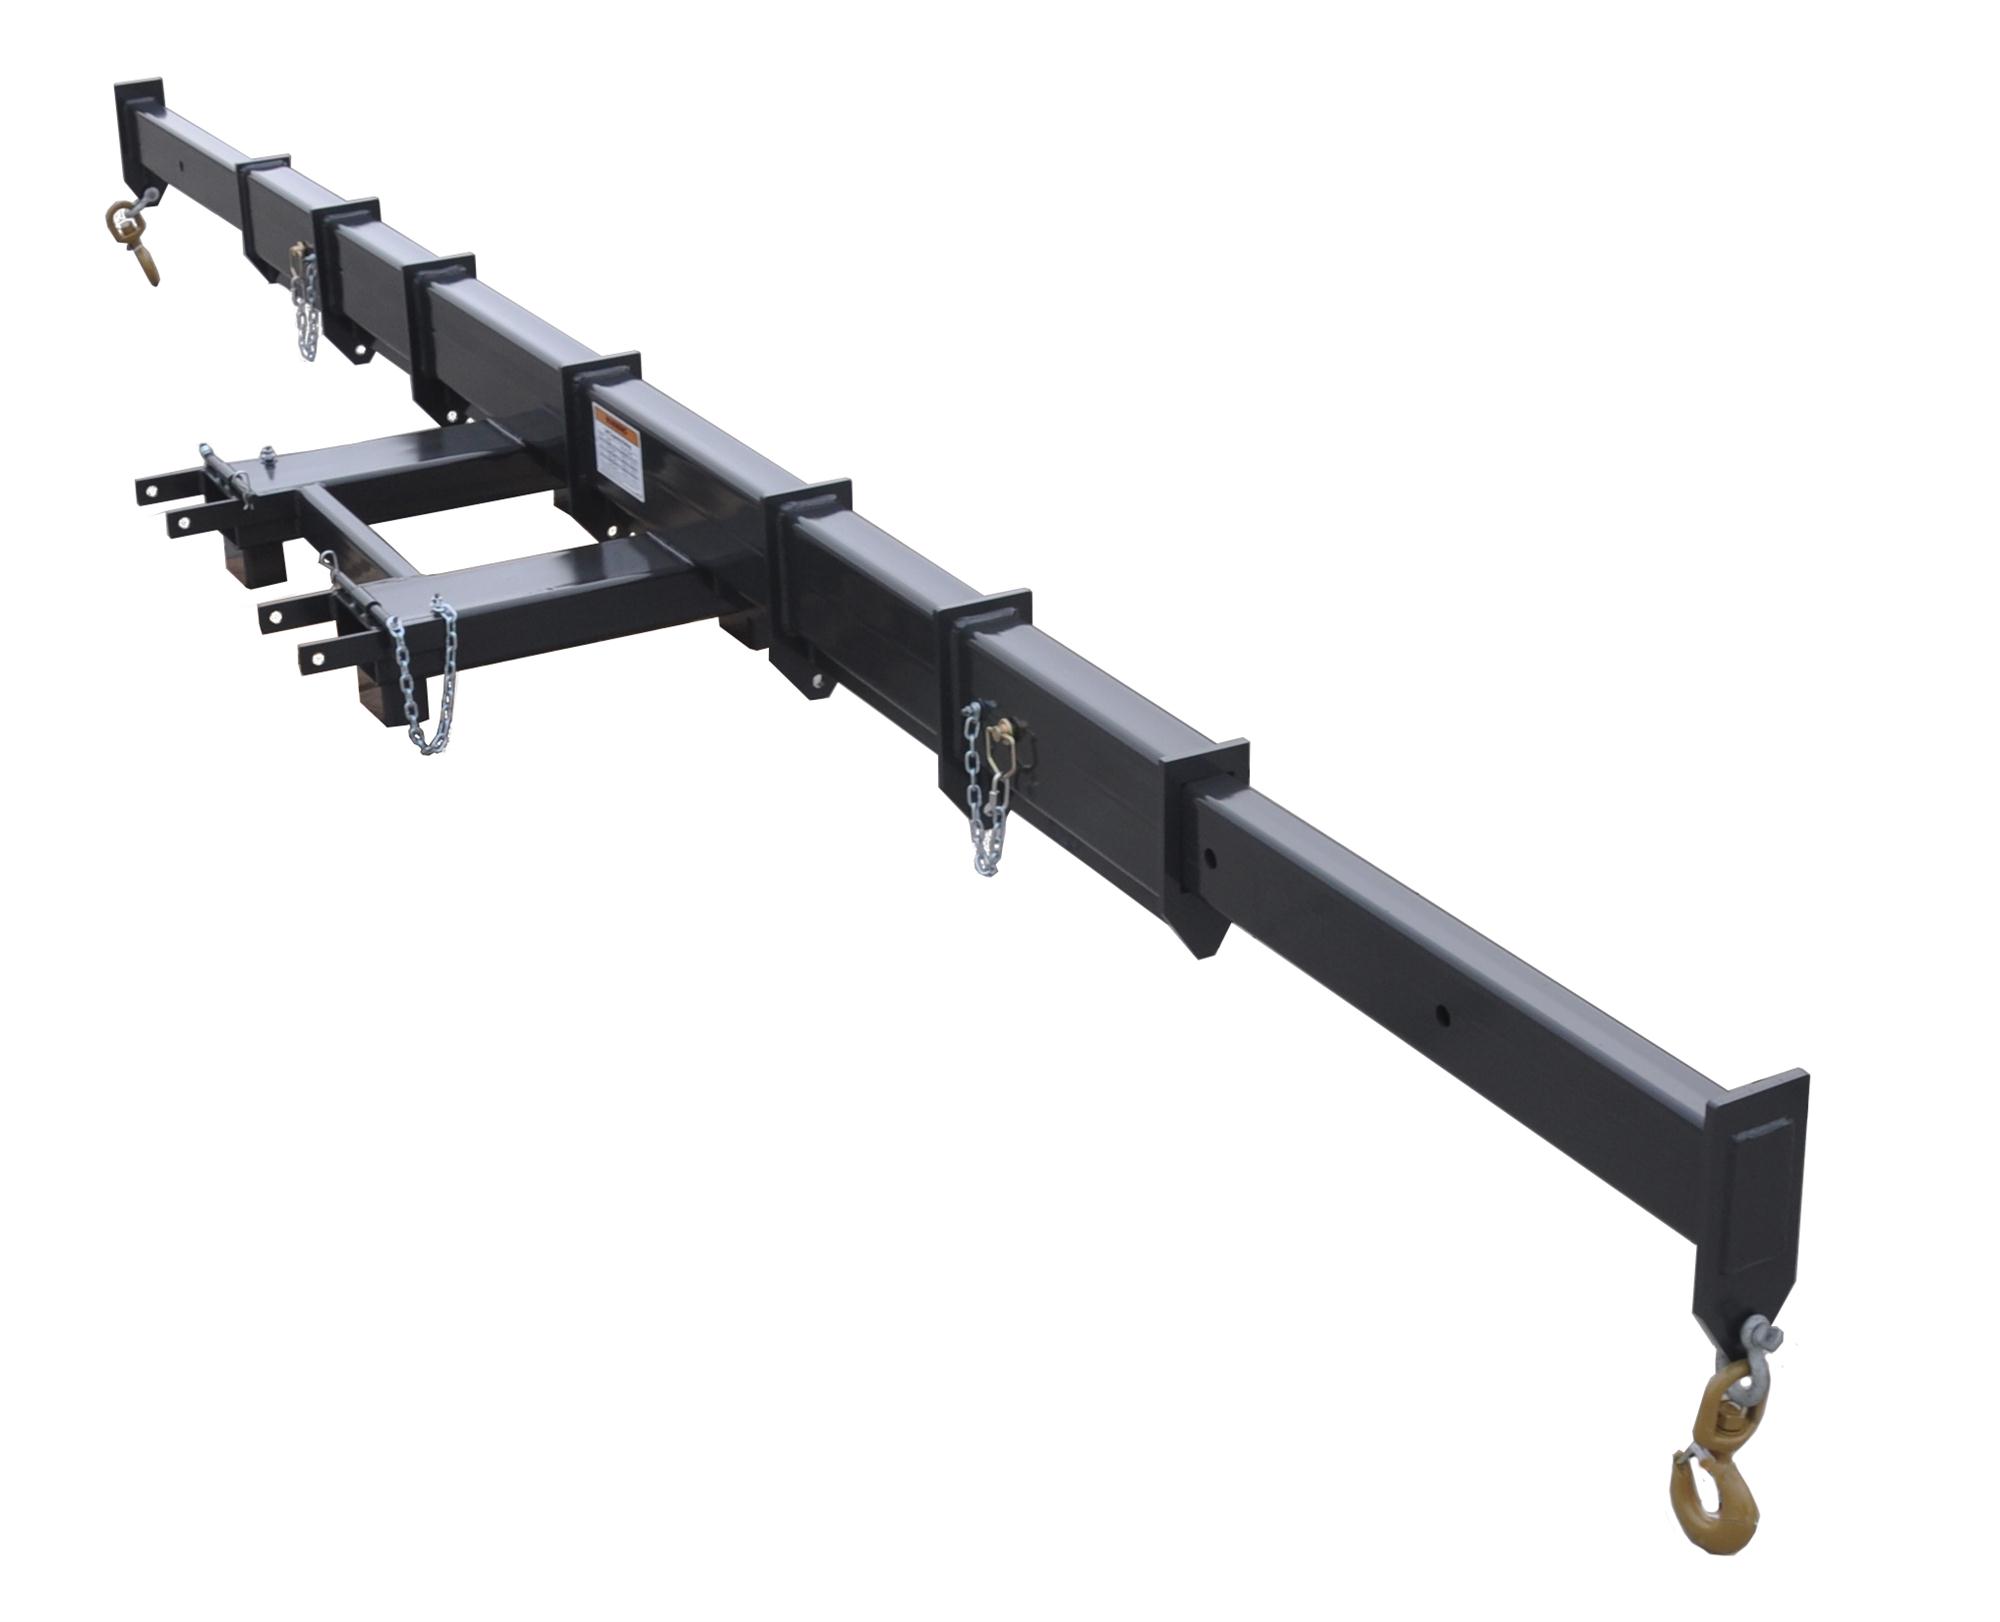 Order adjustable spreader bars from MJ Equipment